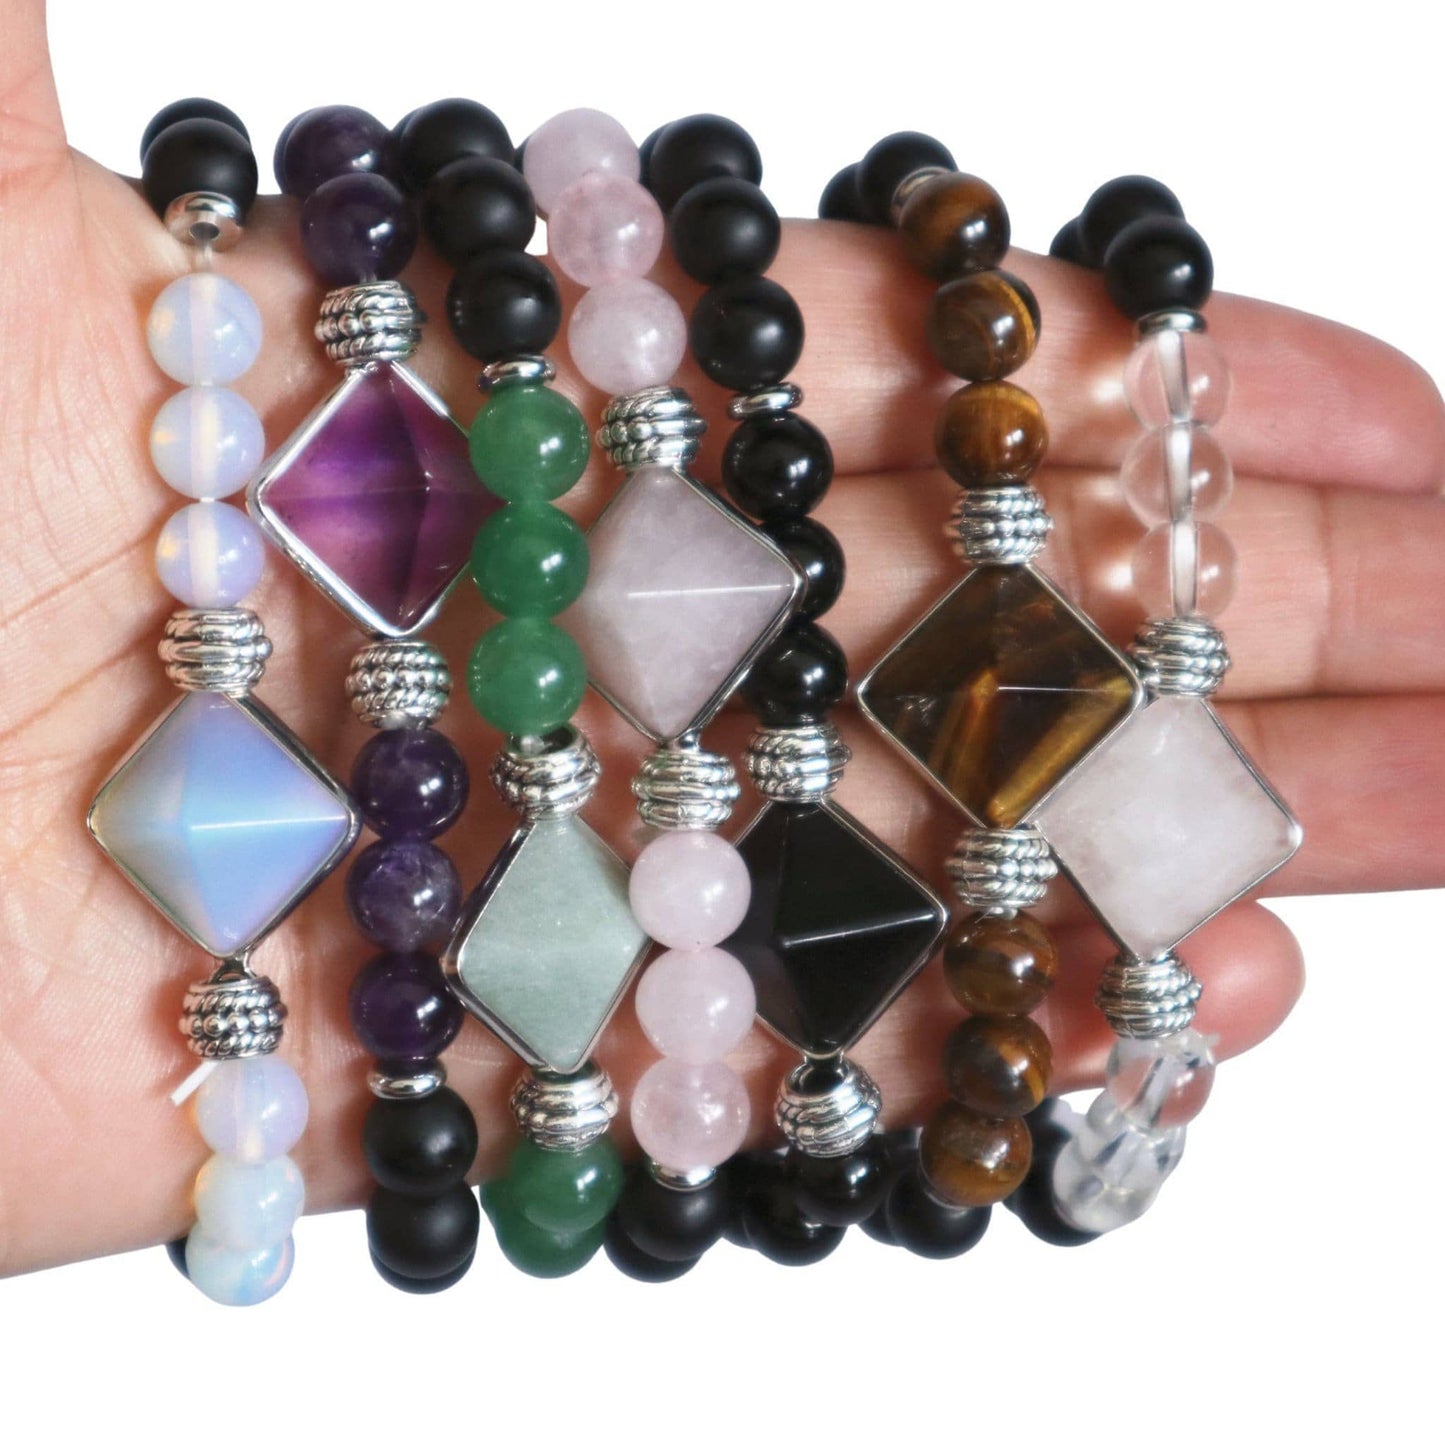 Healing Crystal Bead Bracelets, Natural Stone Stretchy Bracelets, Chakra Balancing Stretchy Bracelets, Boho Chic Gemstone Stretch Bracelets